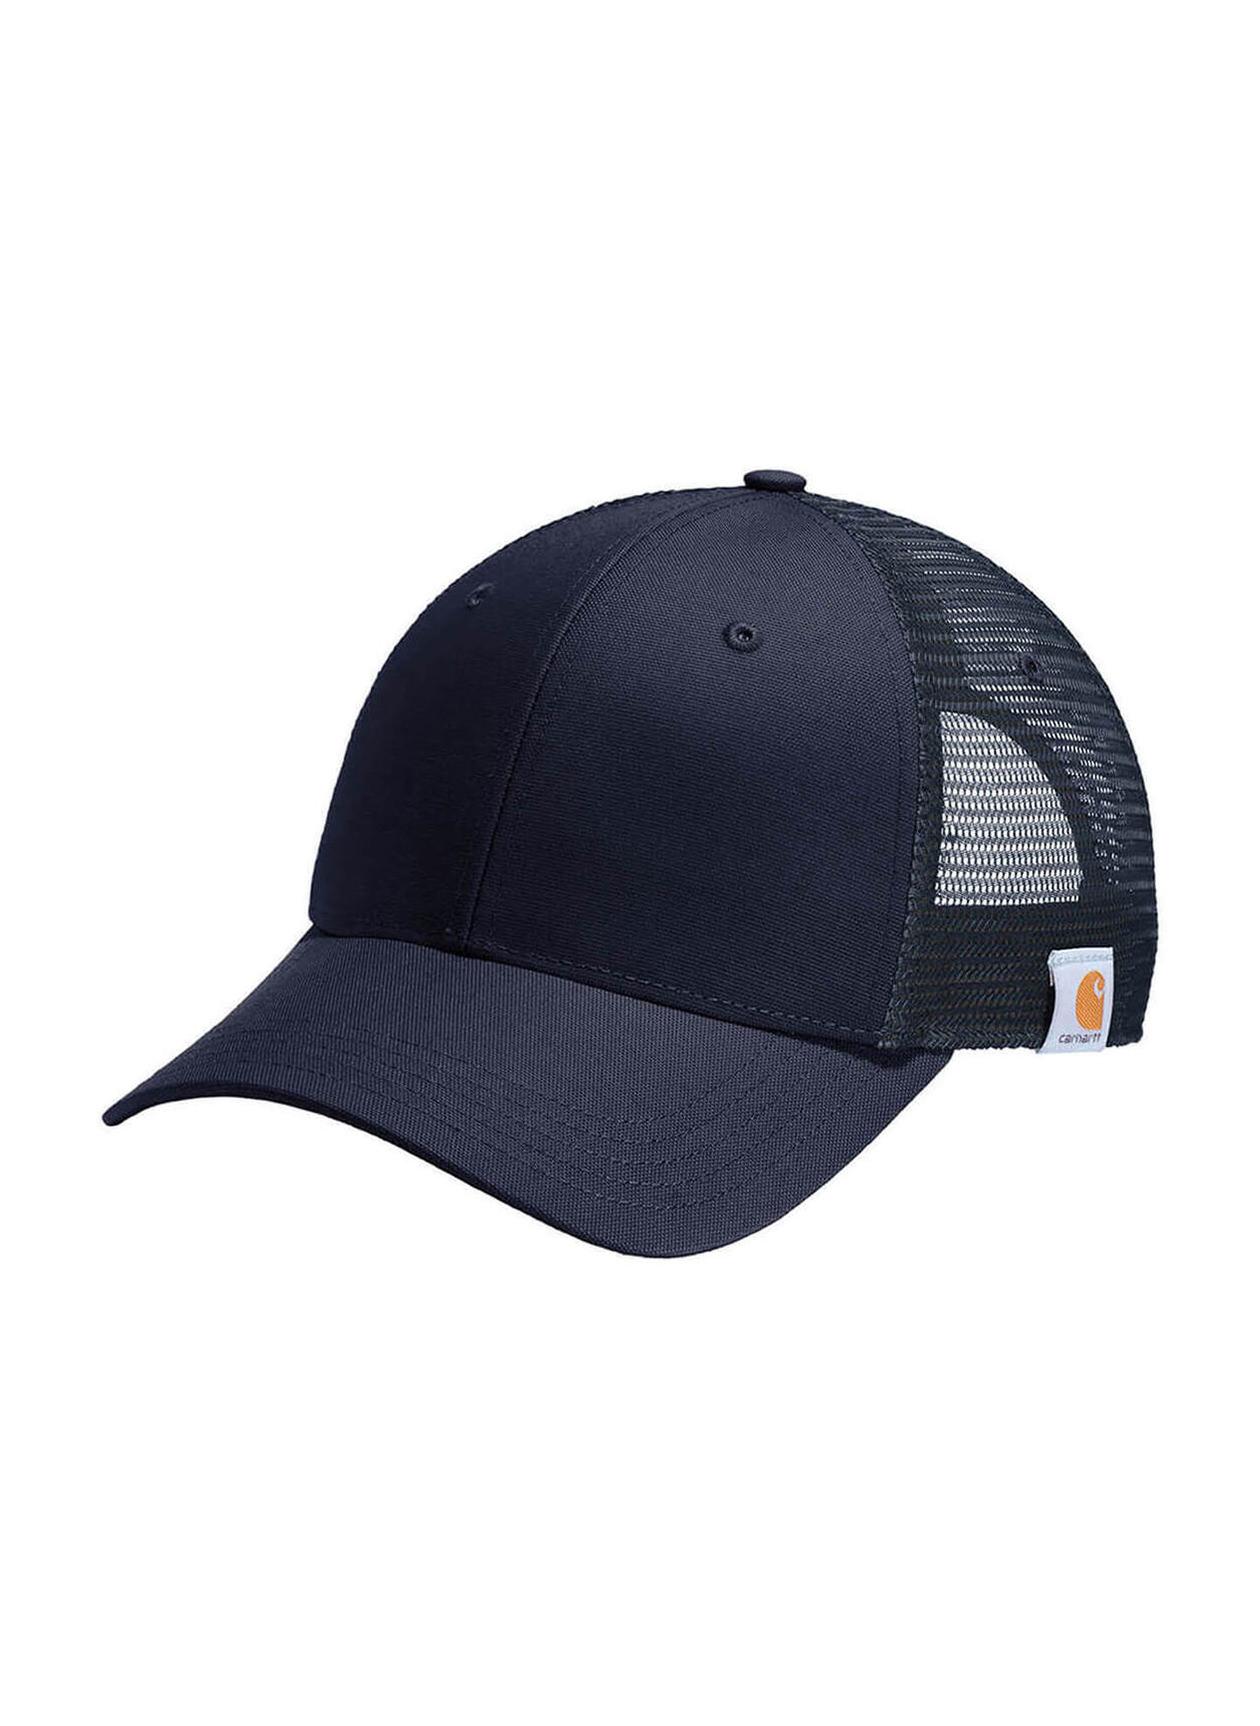 Carhartt Navy Rugged Professional Series Hat